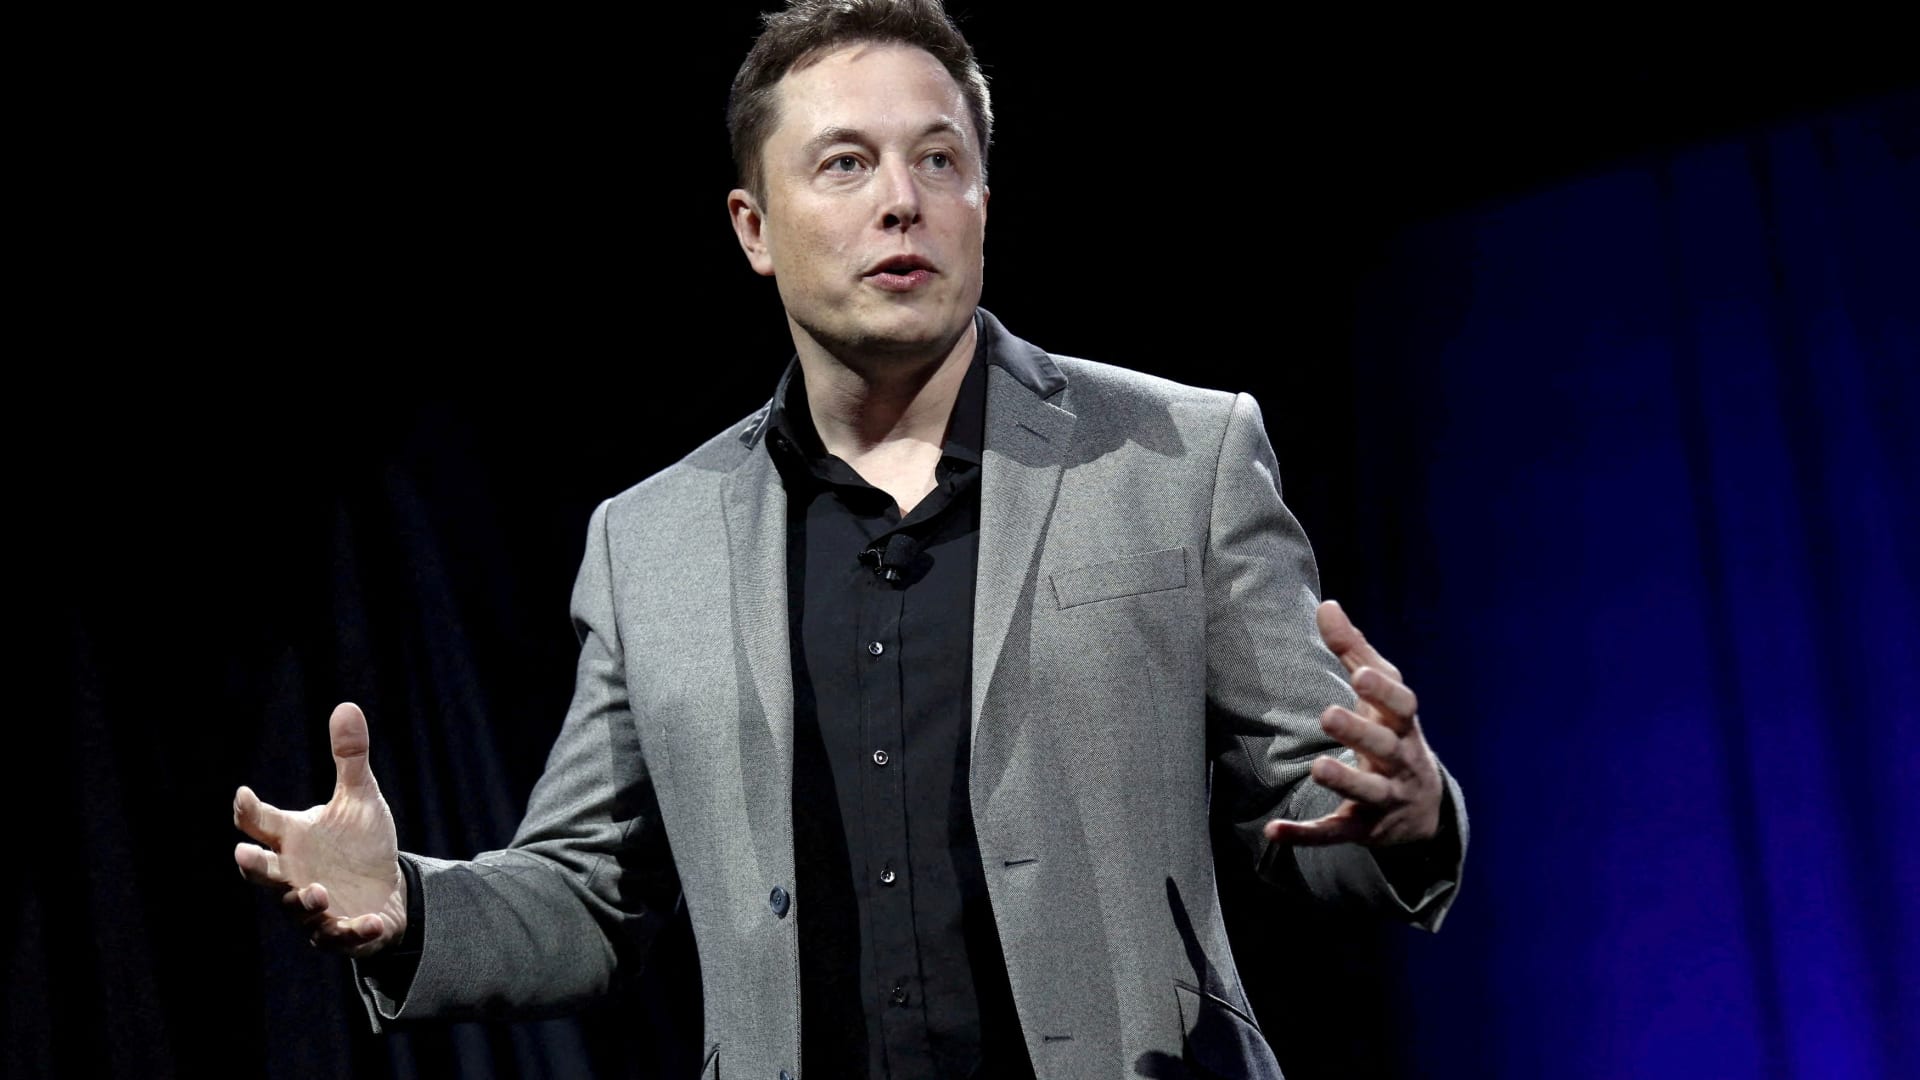 Elon Musk challenges Twitter CEO Parag Agarwal to debate bots